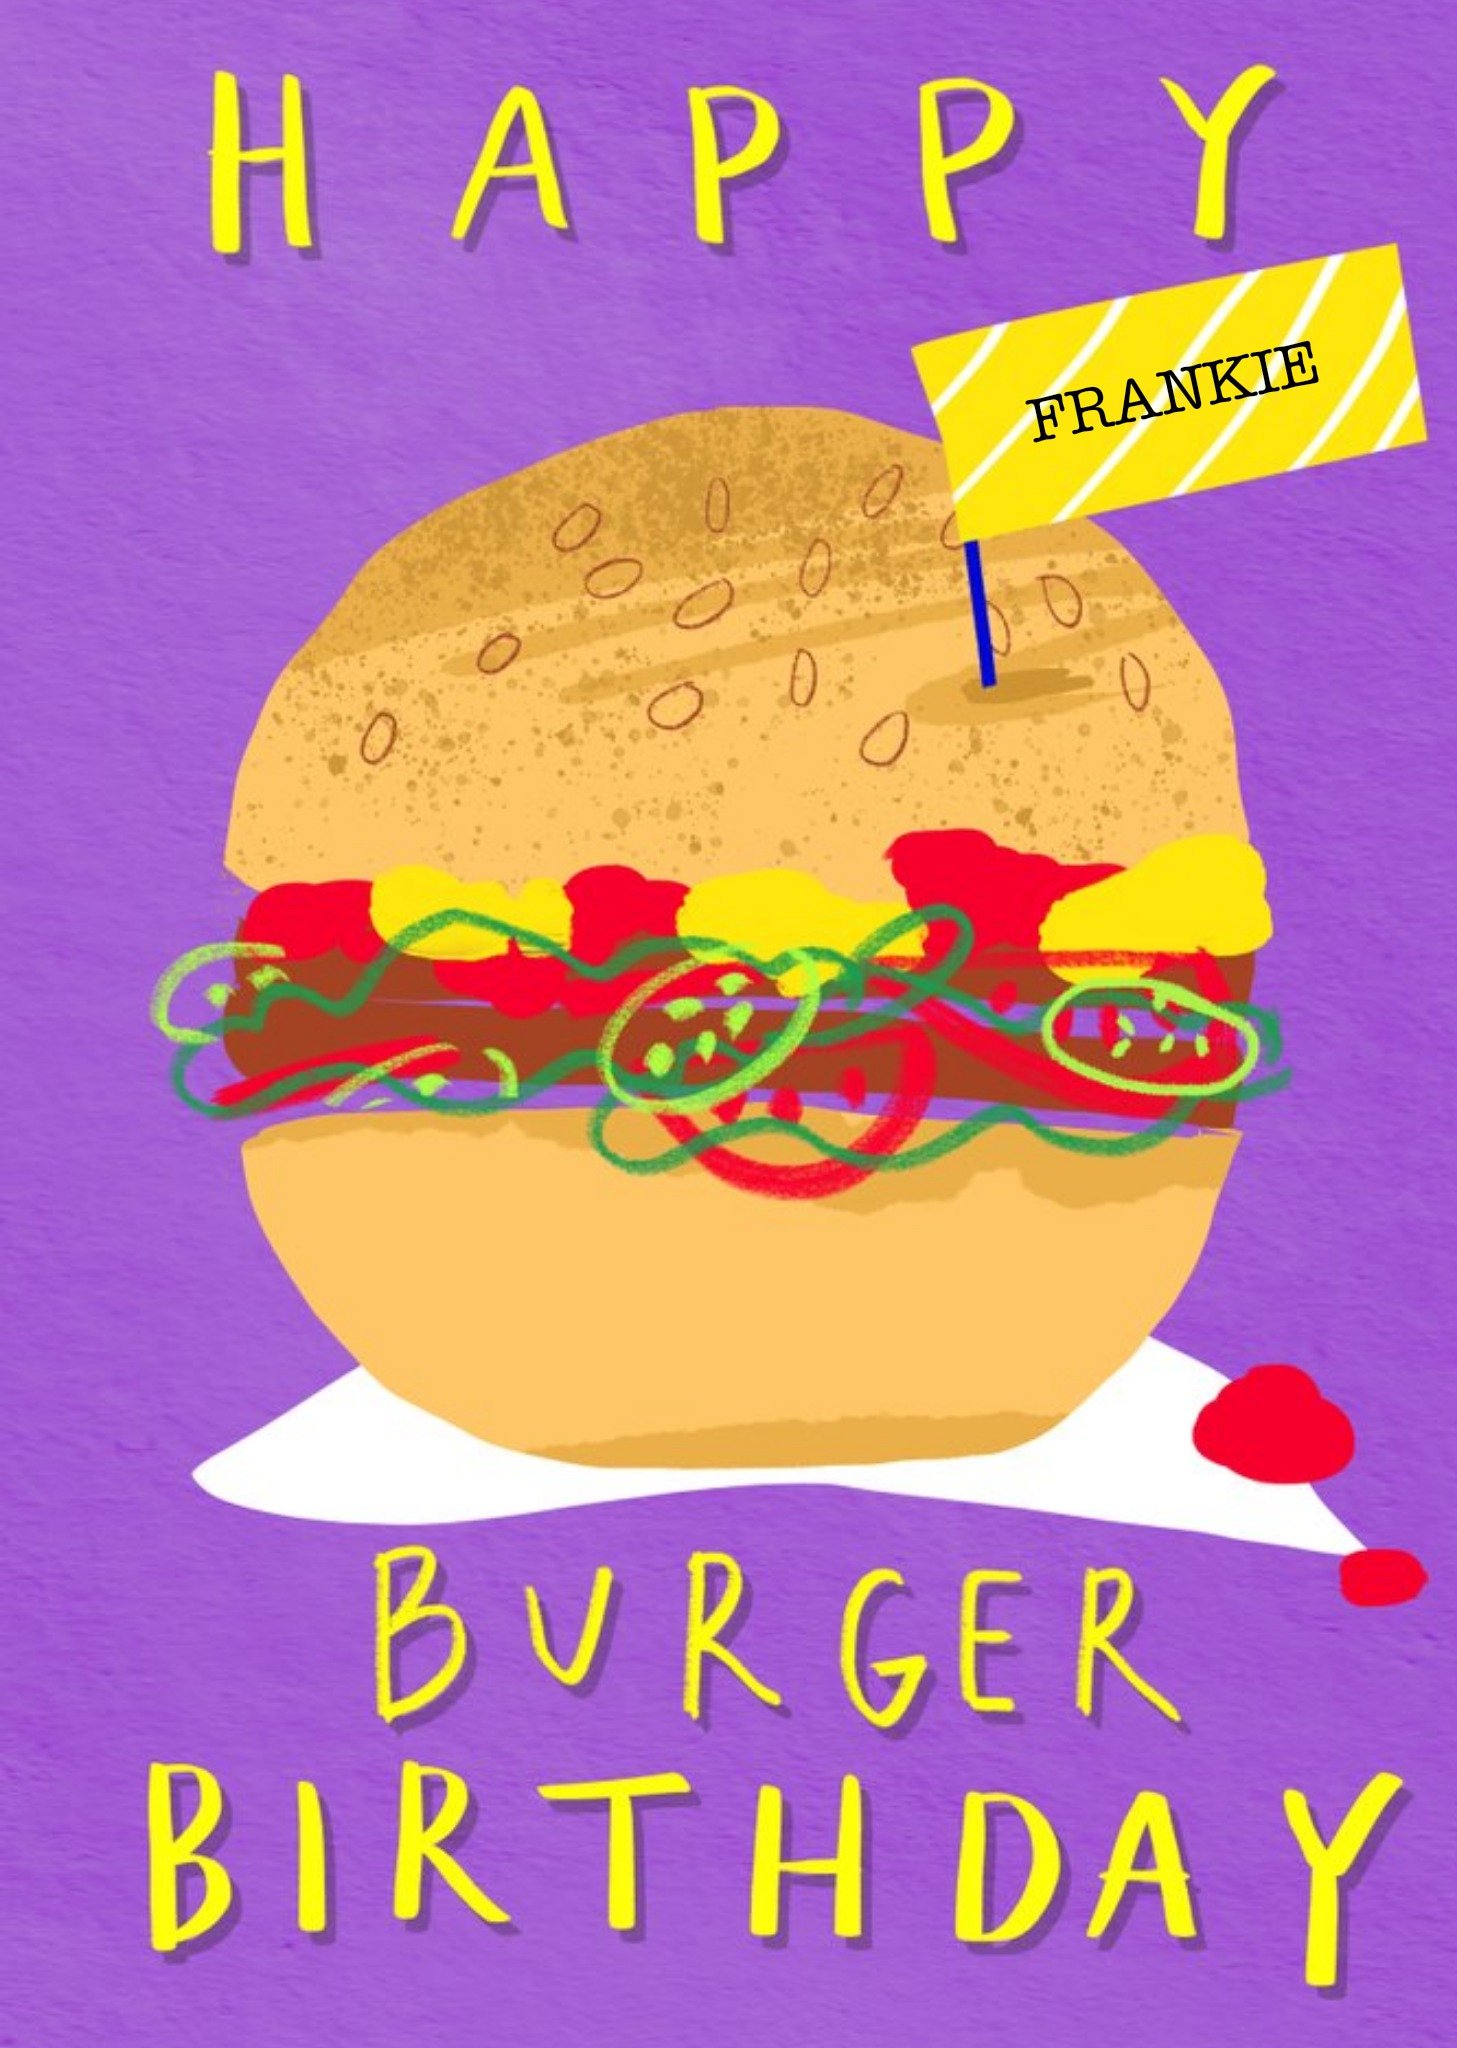 Moonpig Food Illustration Happy Burger Birthday Card By Elaine Field Ecard